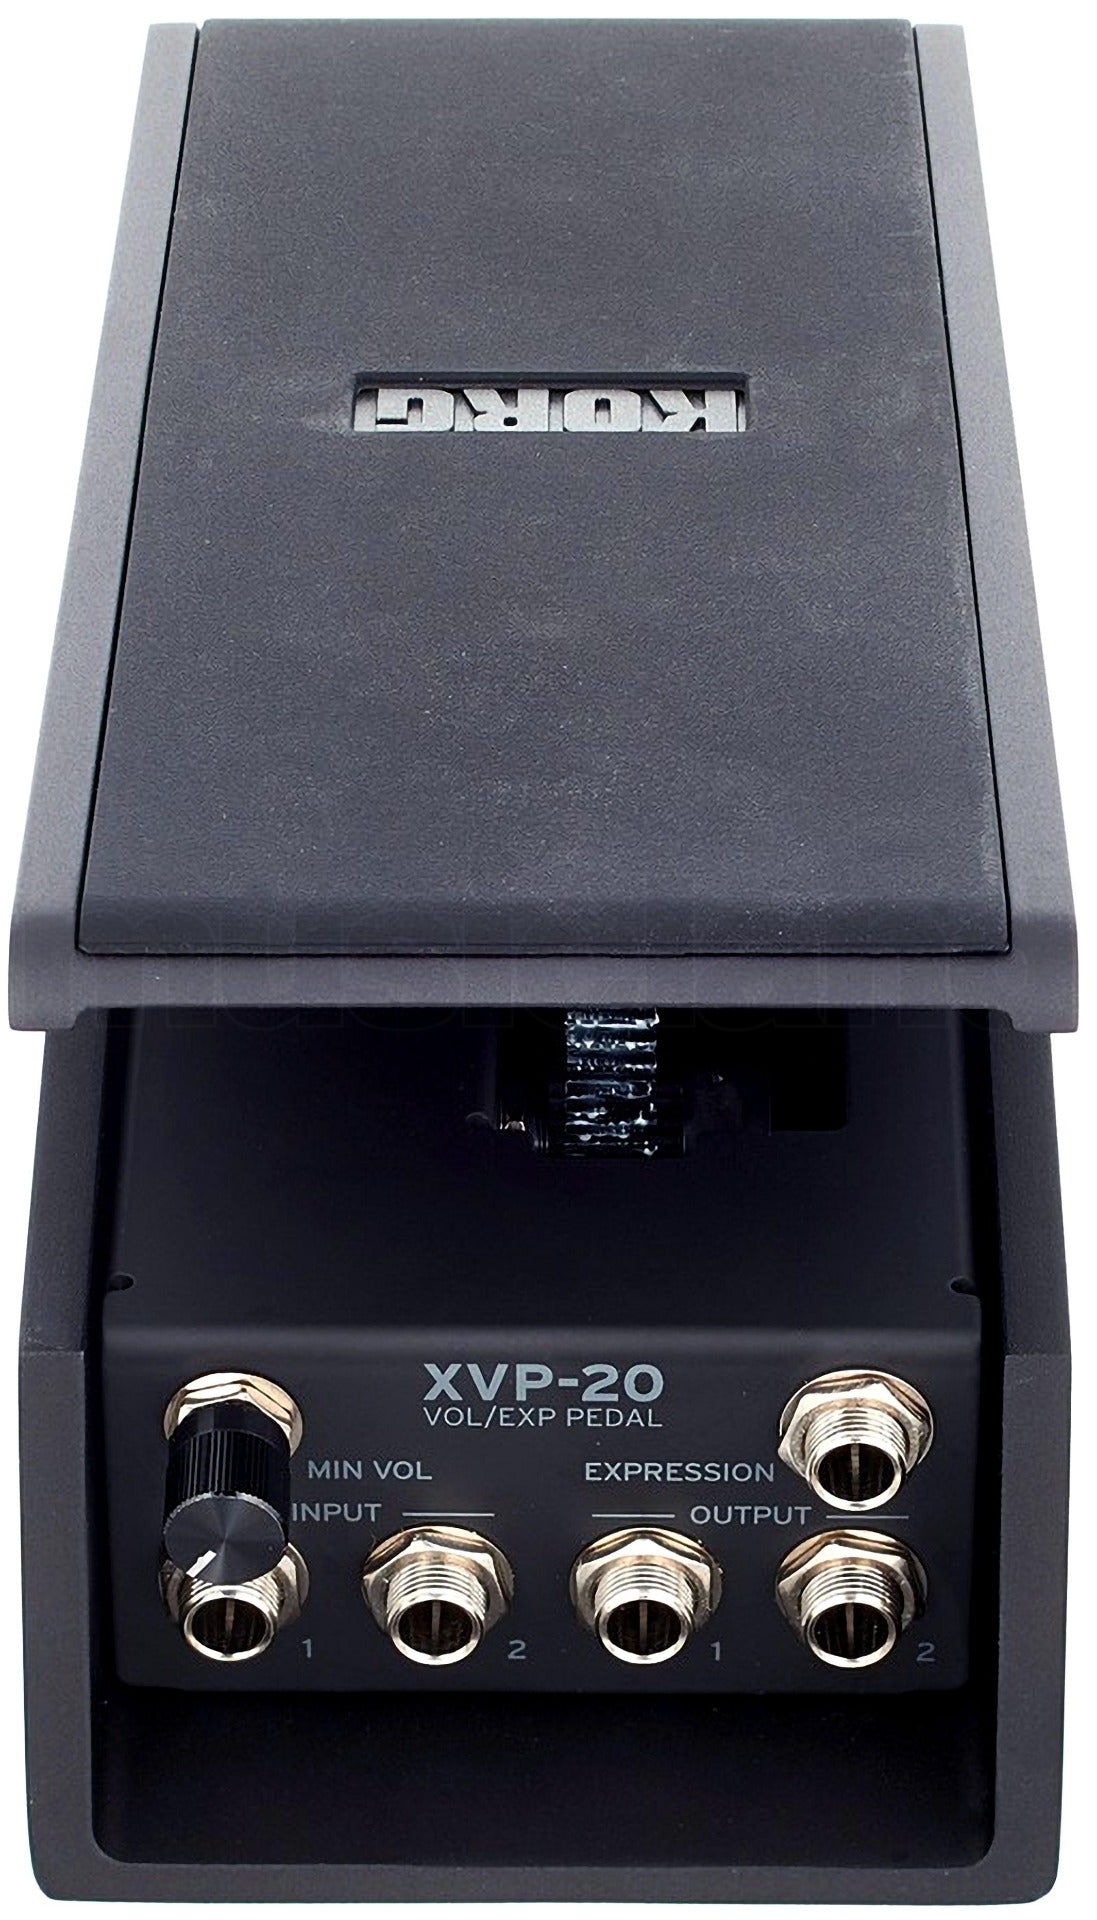 Korg XVP-20 Expression / Volume Pedal